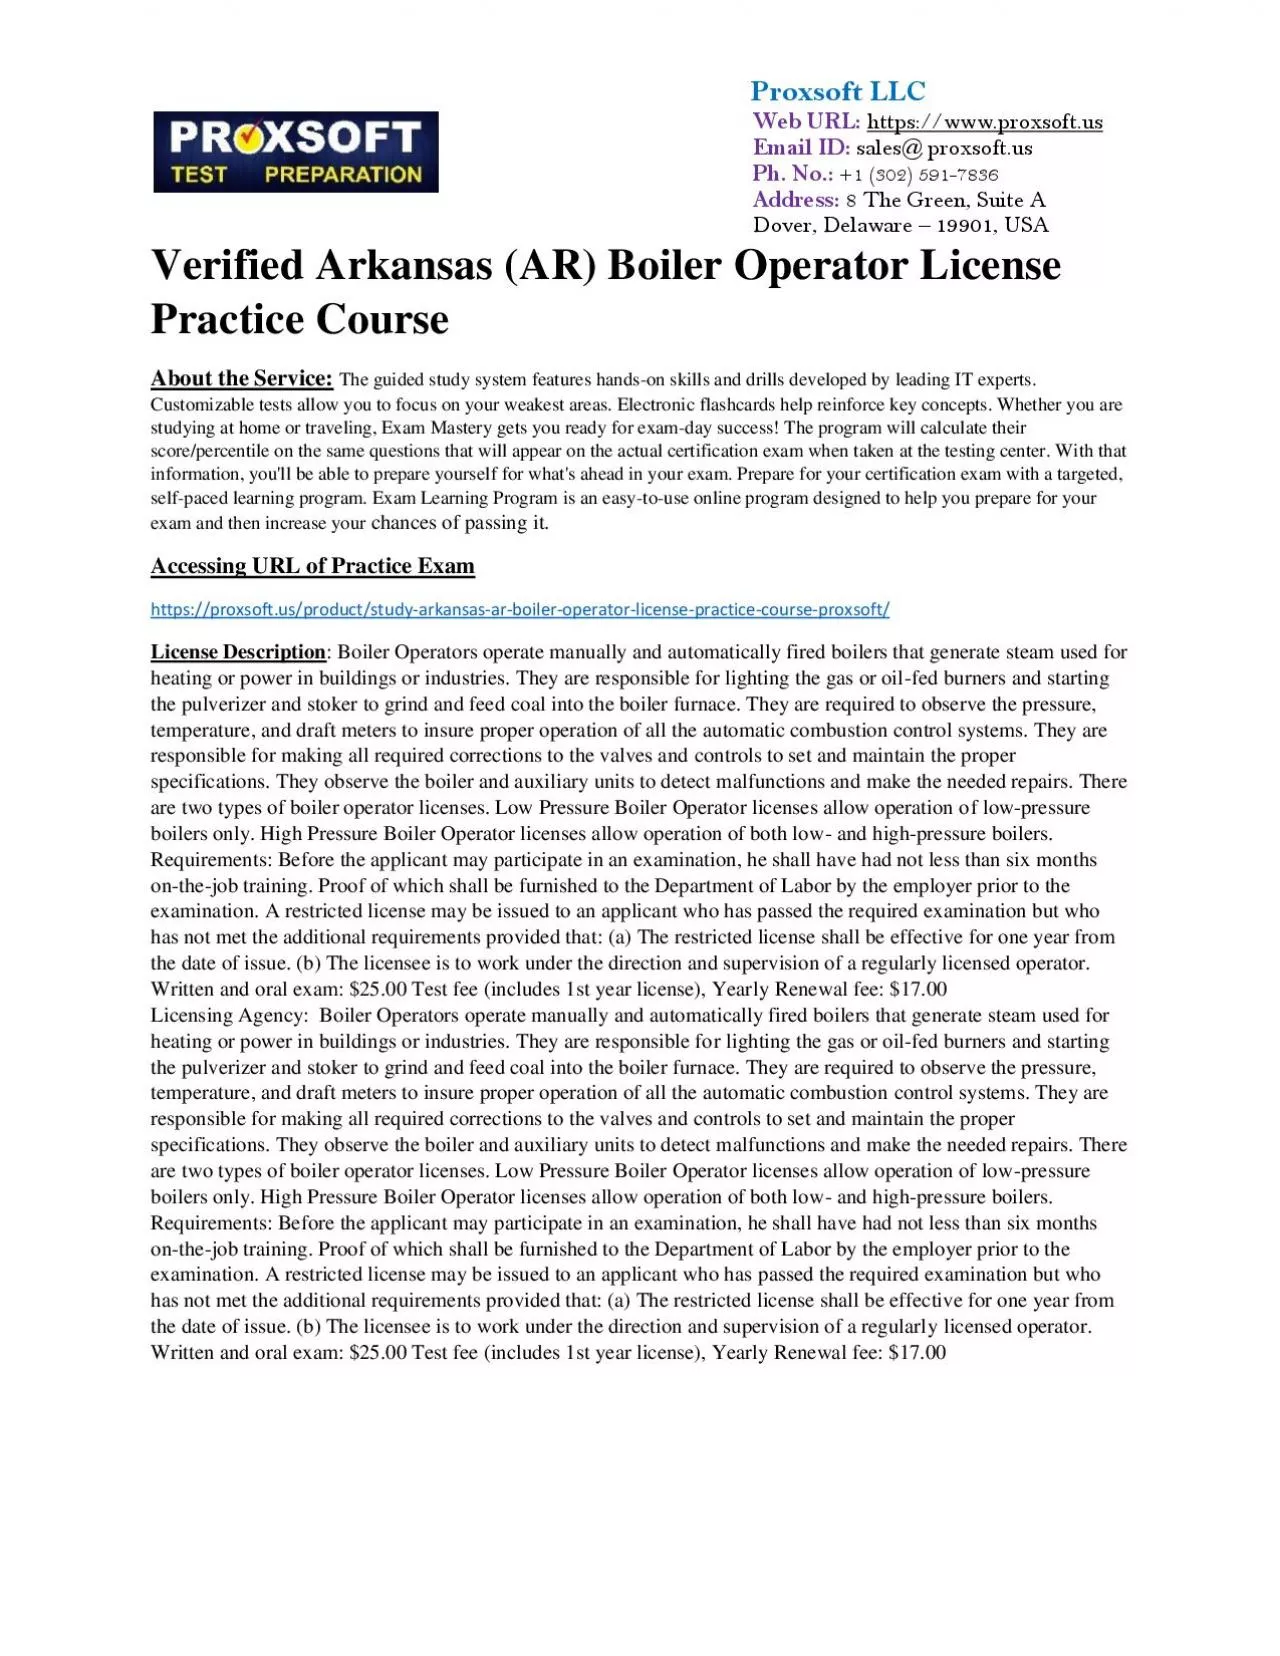 Verified Arkansas (AR) Boiler Operator License Practice Course